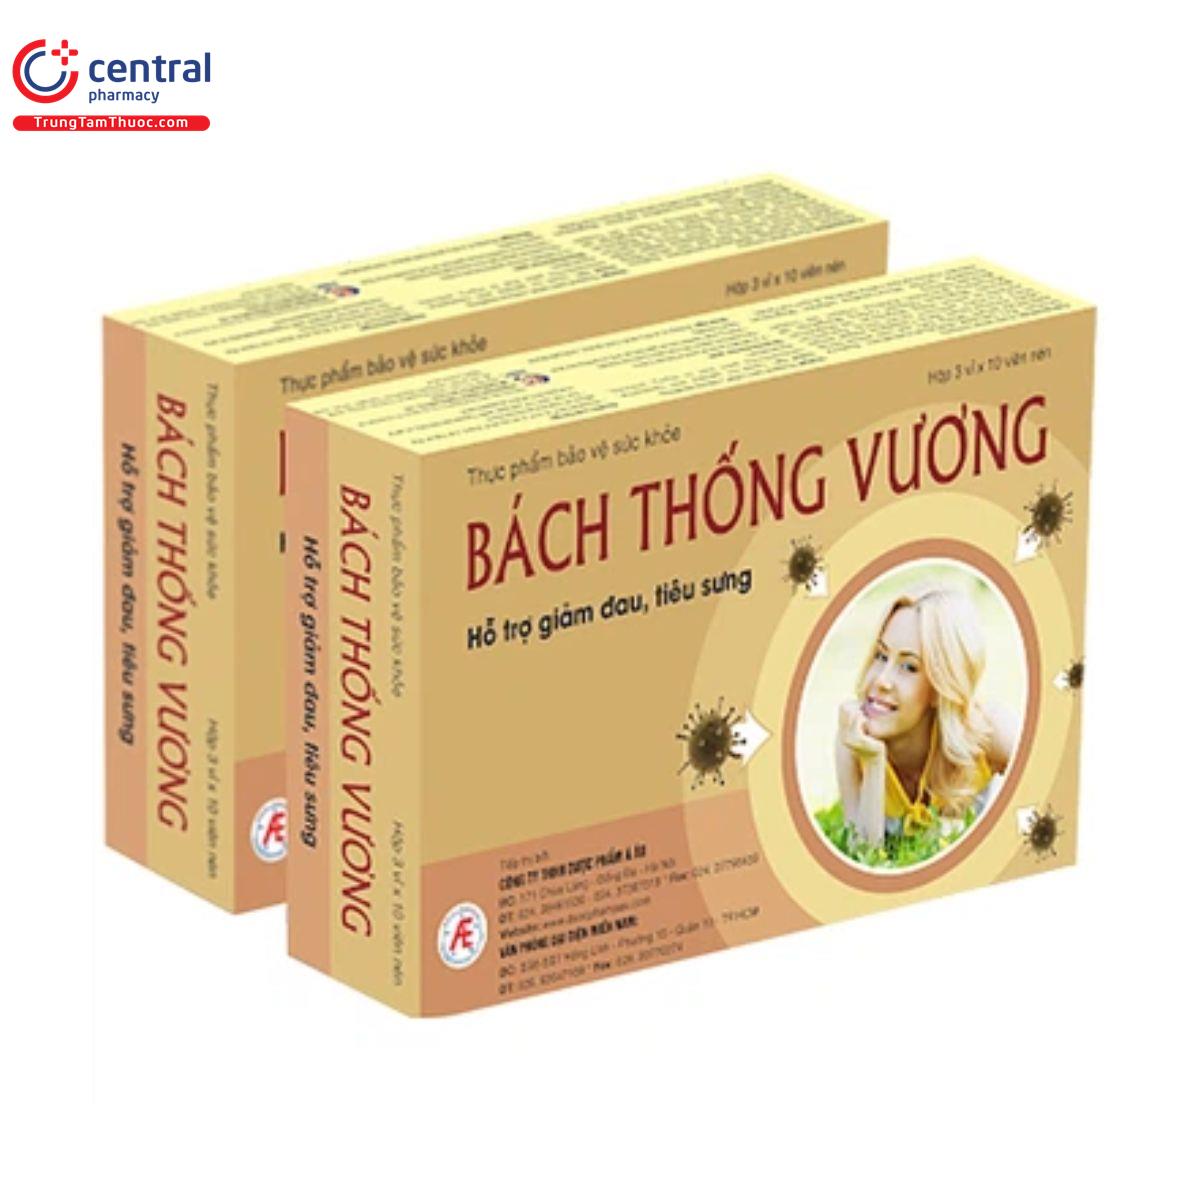 bach thong vuong 3 C0428